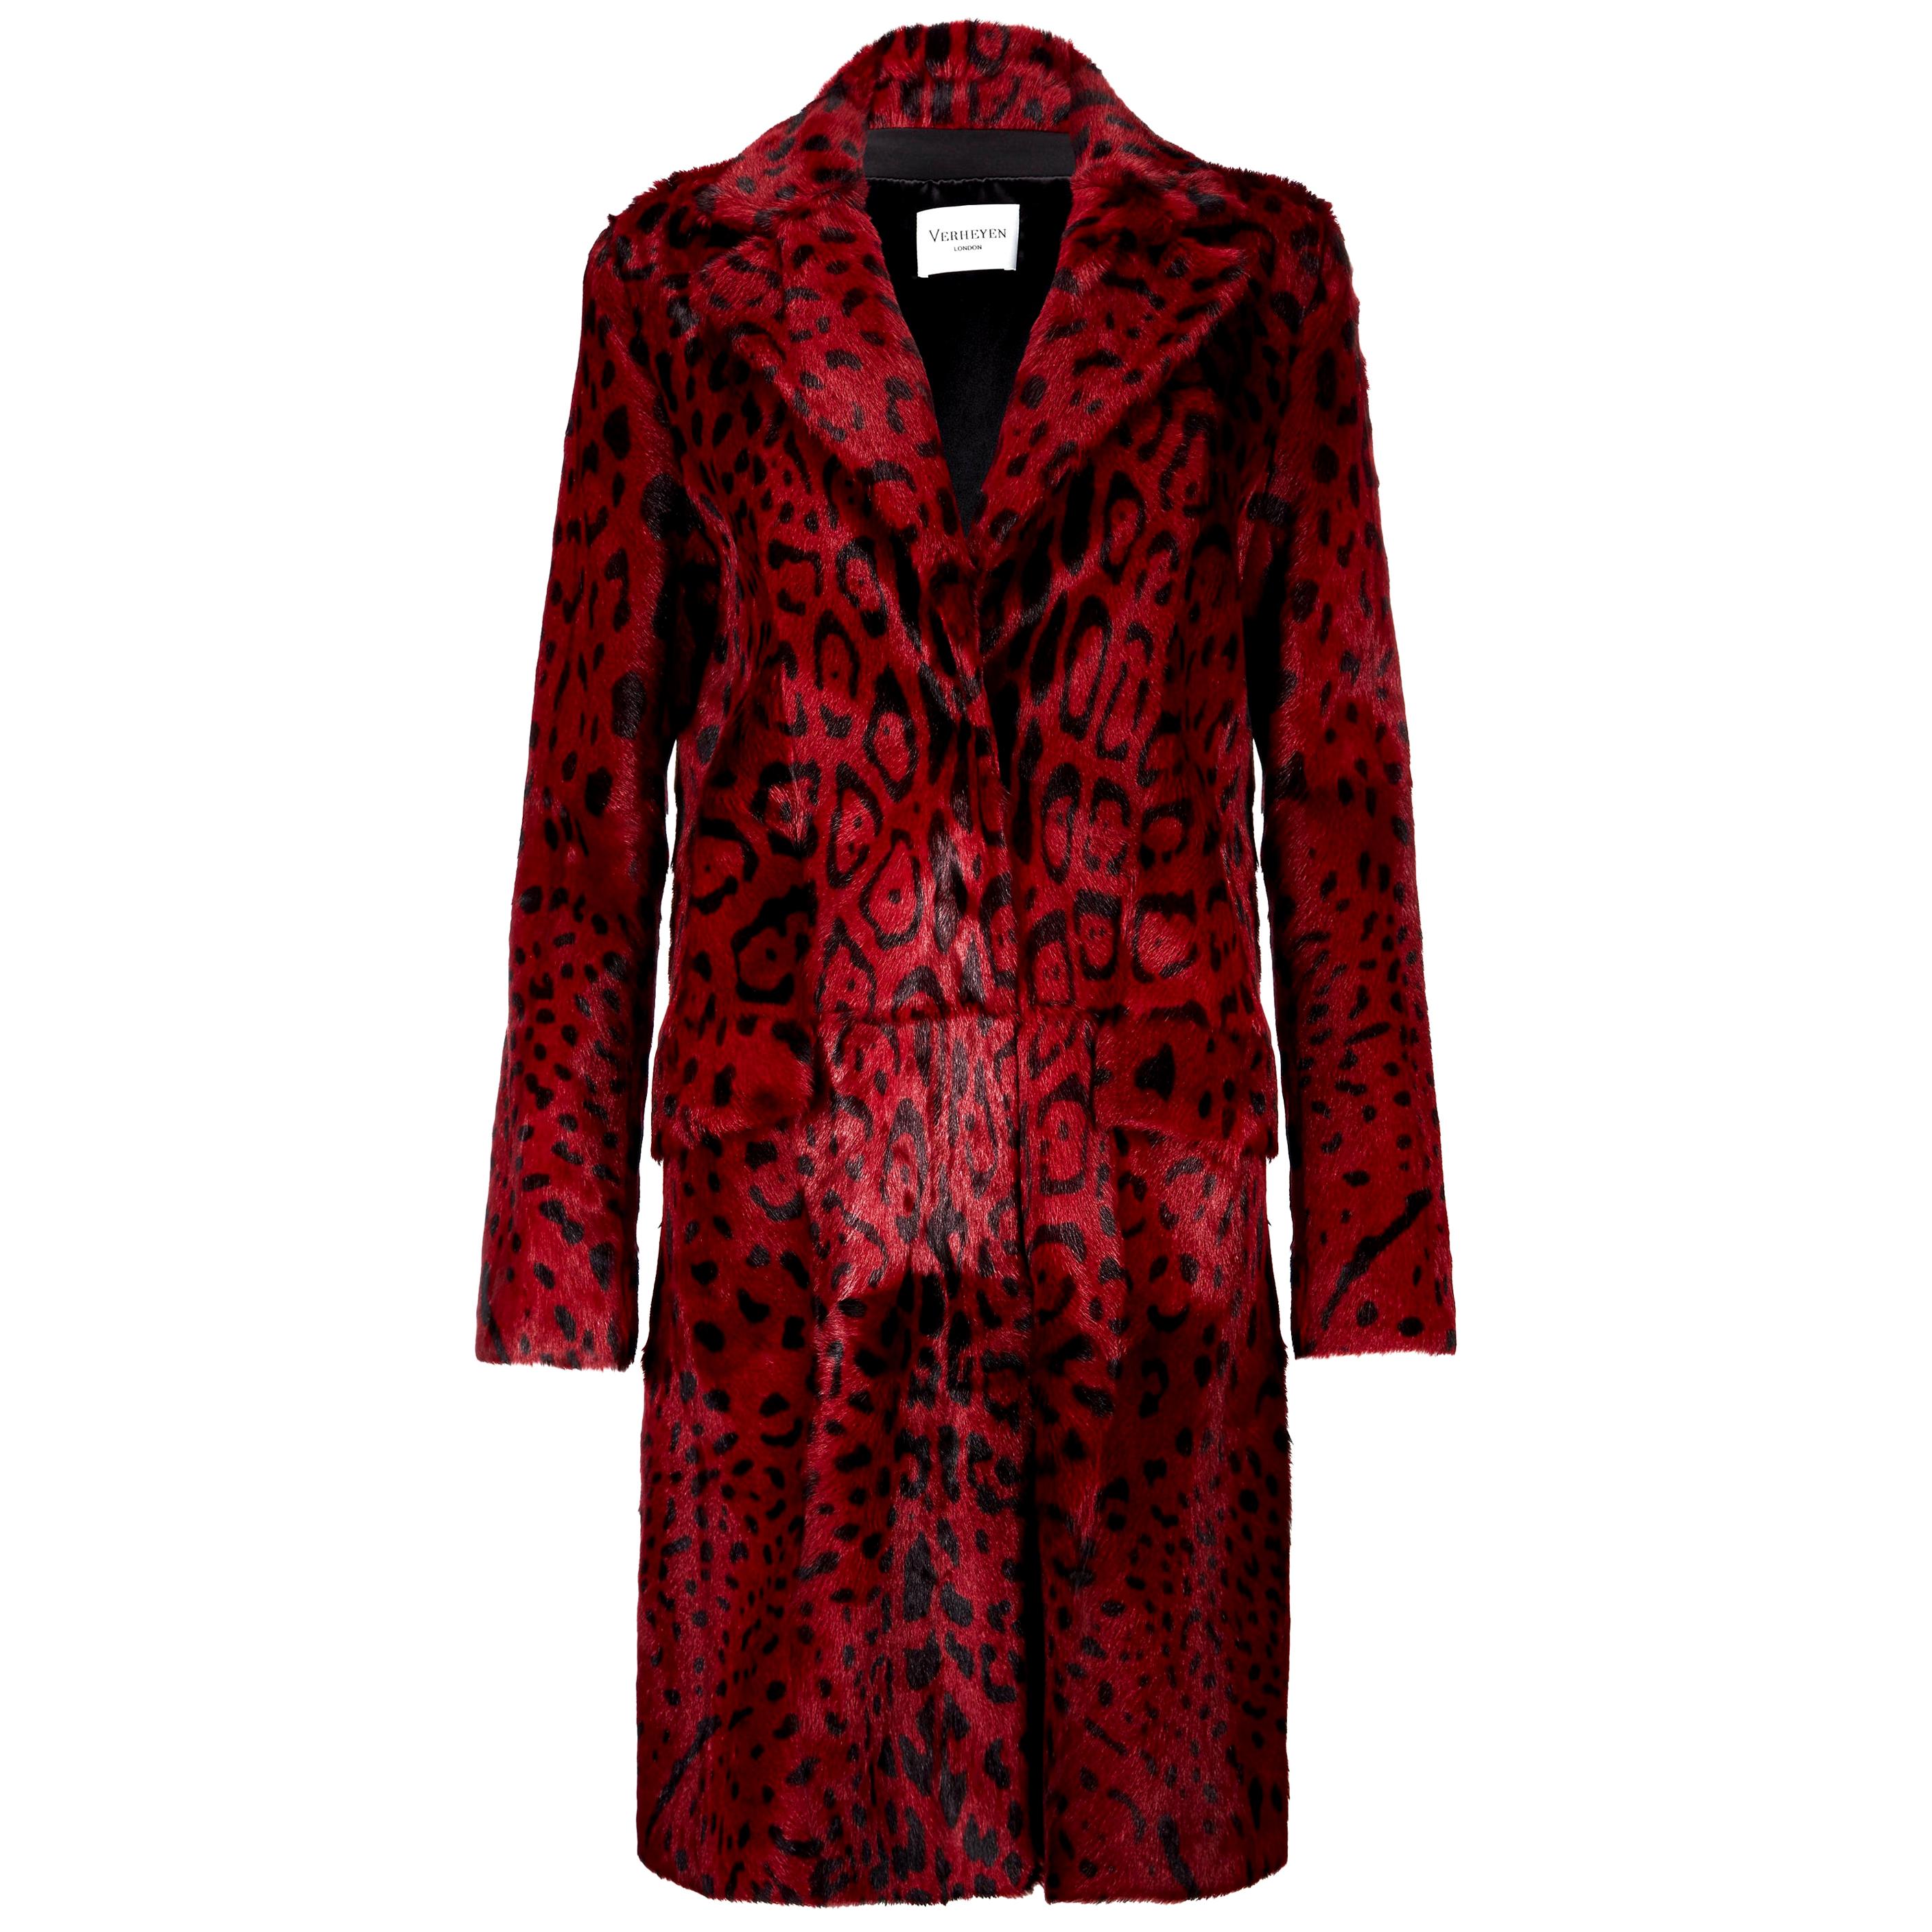 Verheyen London Leopard Print Coat in Red Ruby Goat Hair Fur UK 10 